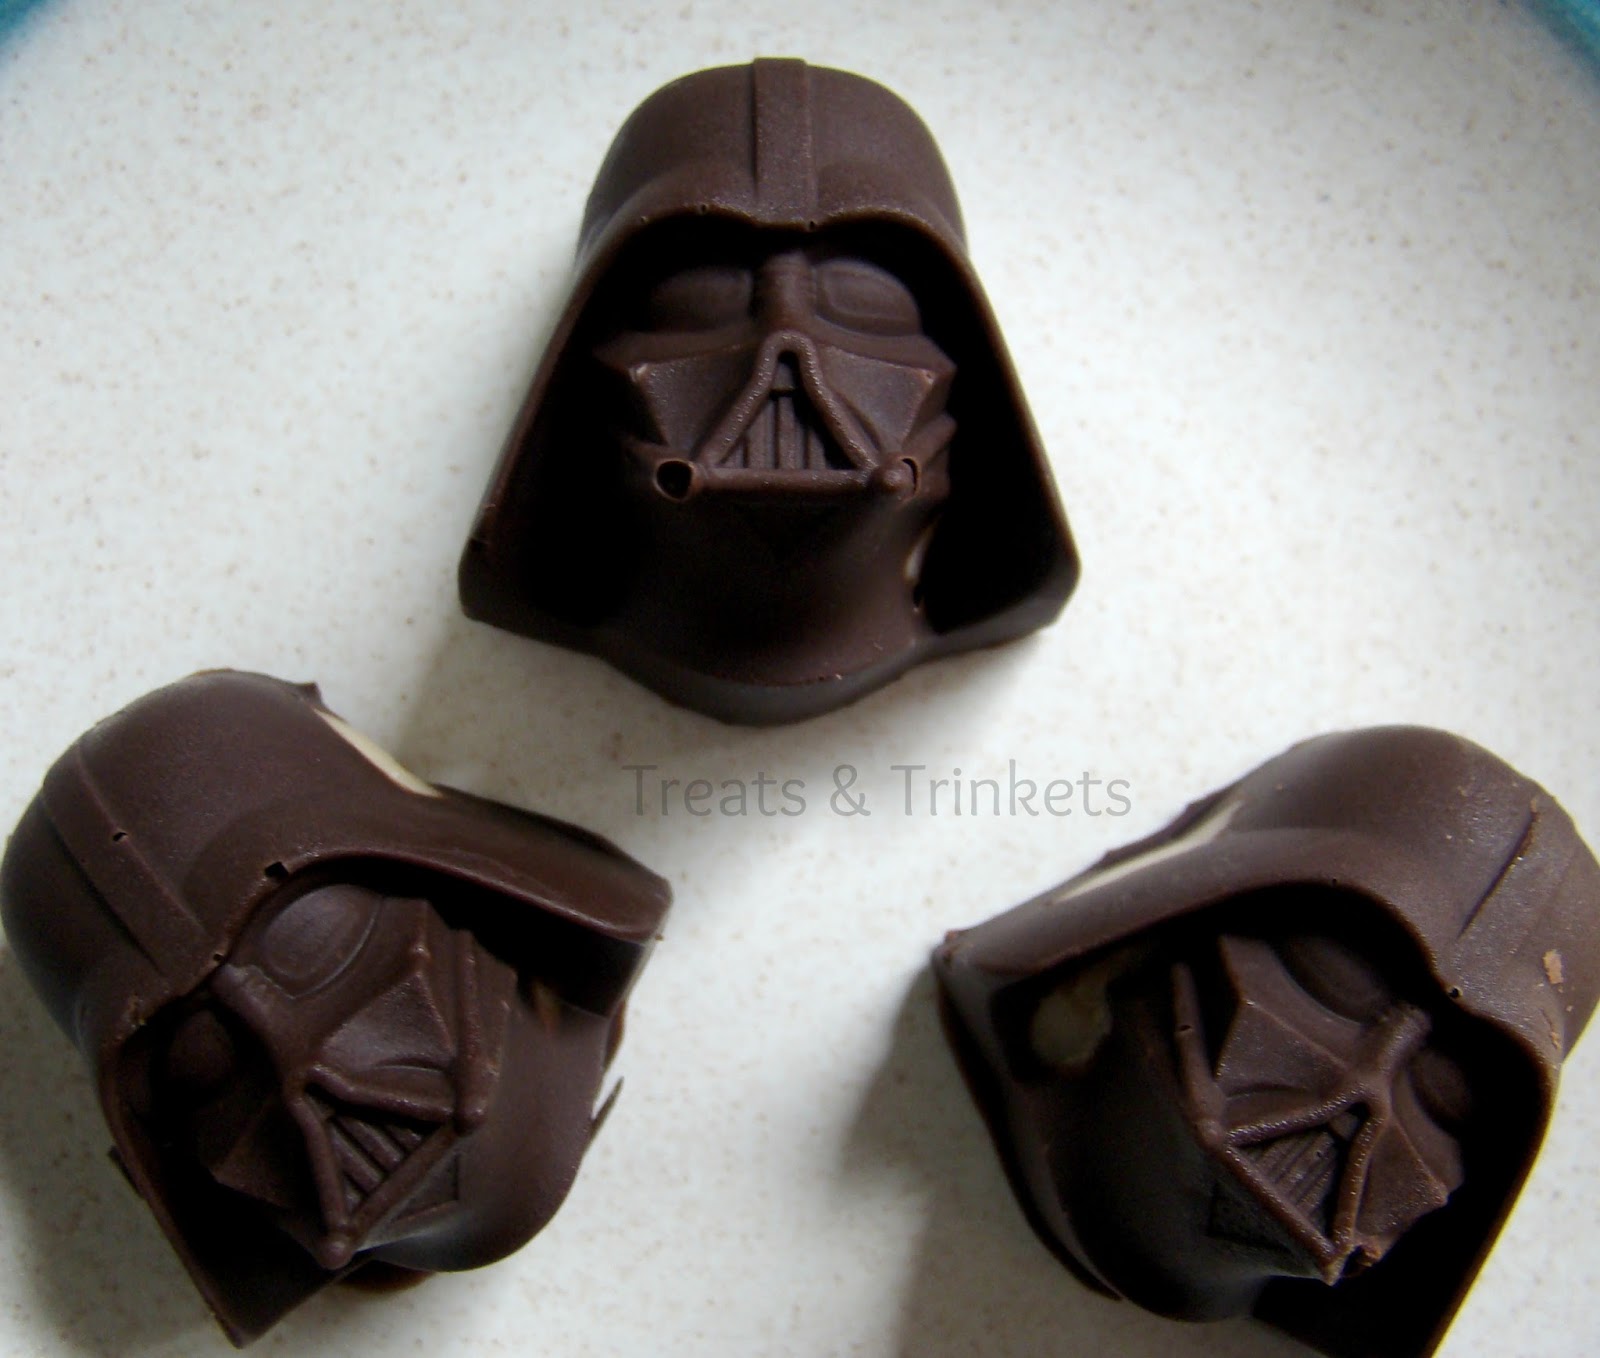 Disney Ice Cube Tray - Chocolate Candy Mold - Star Wars Darth Vader